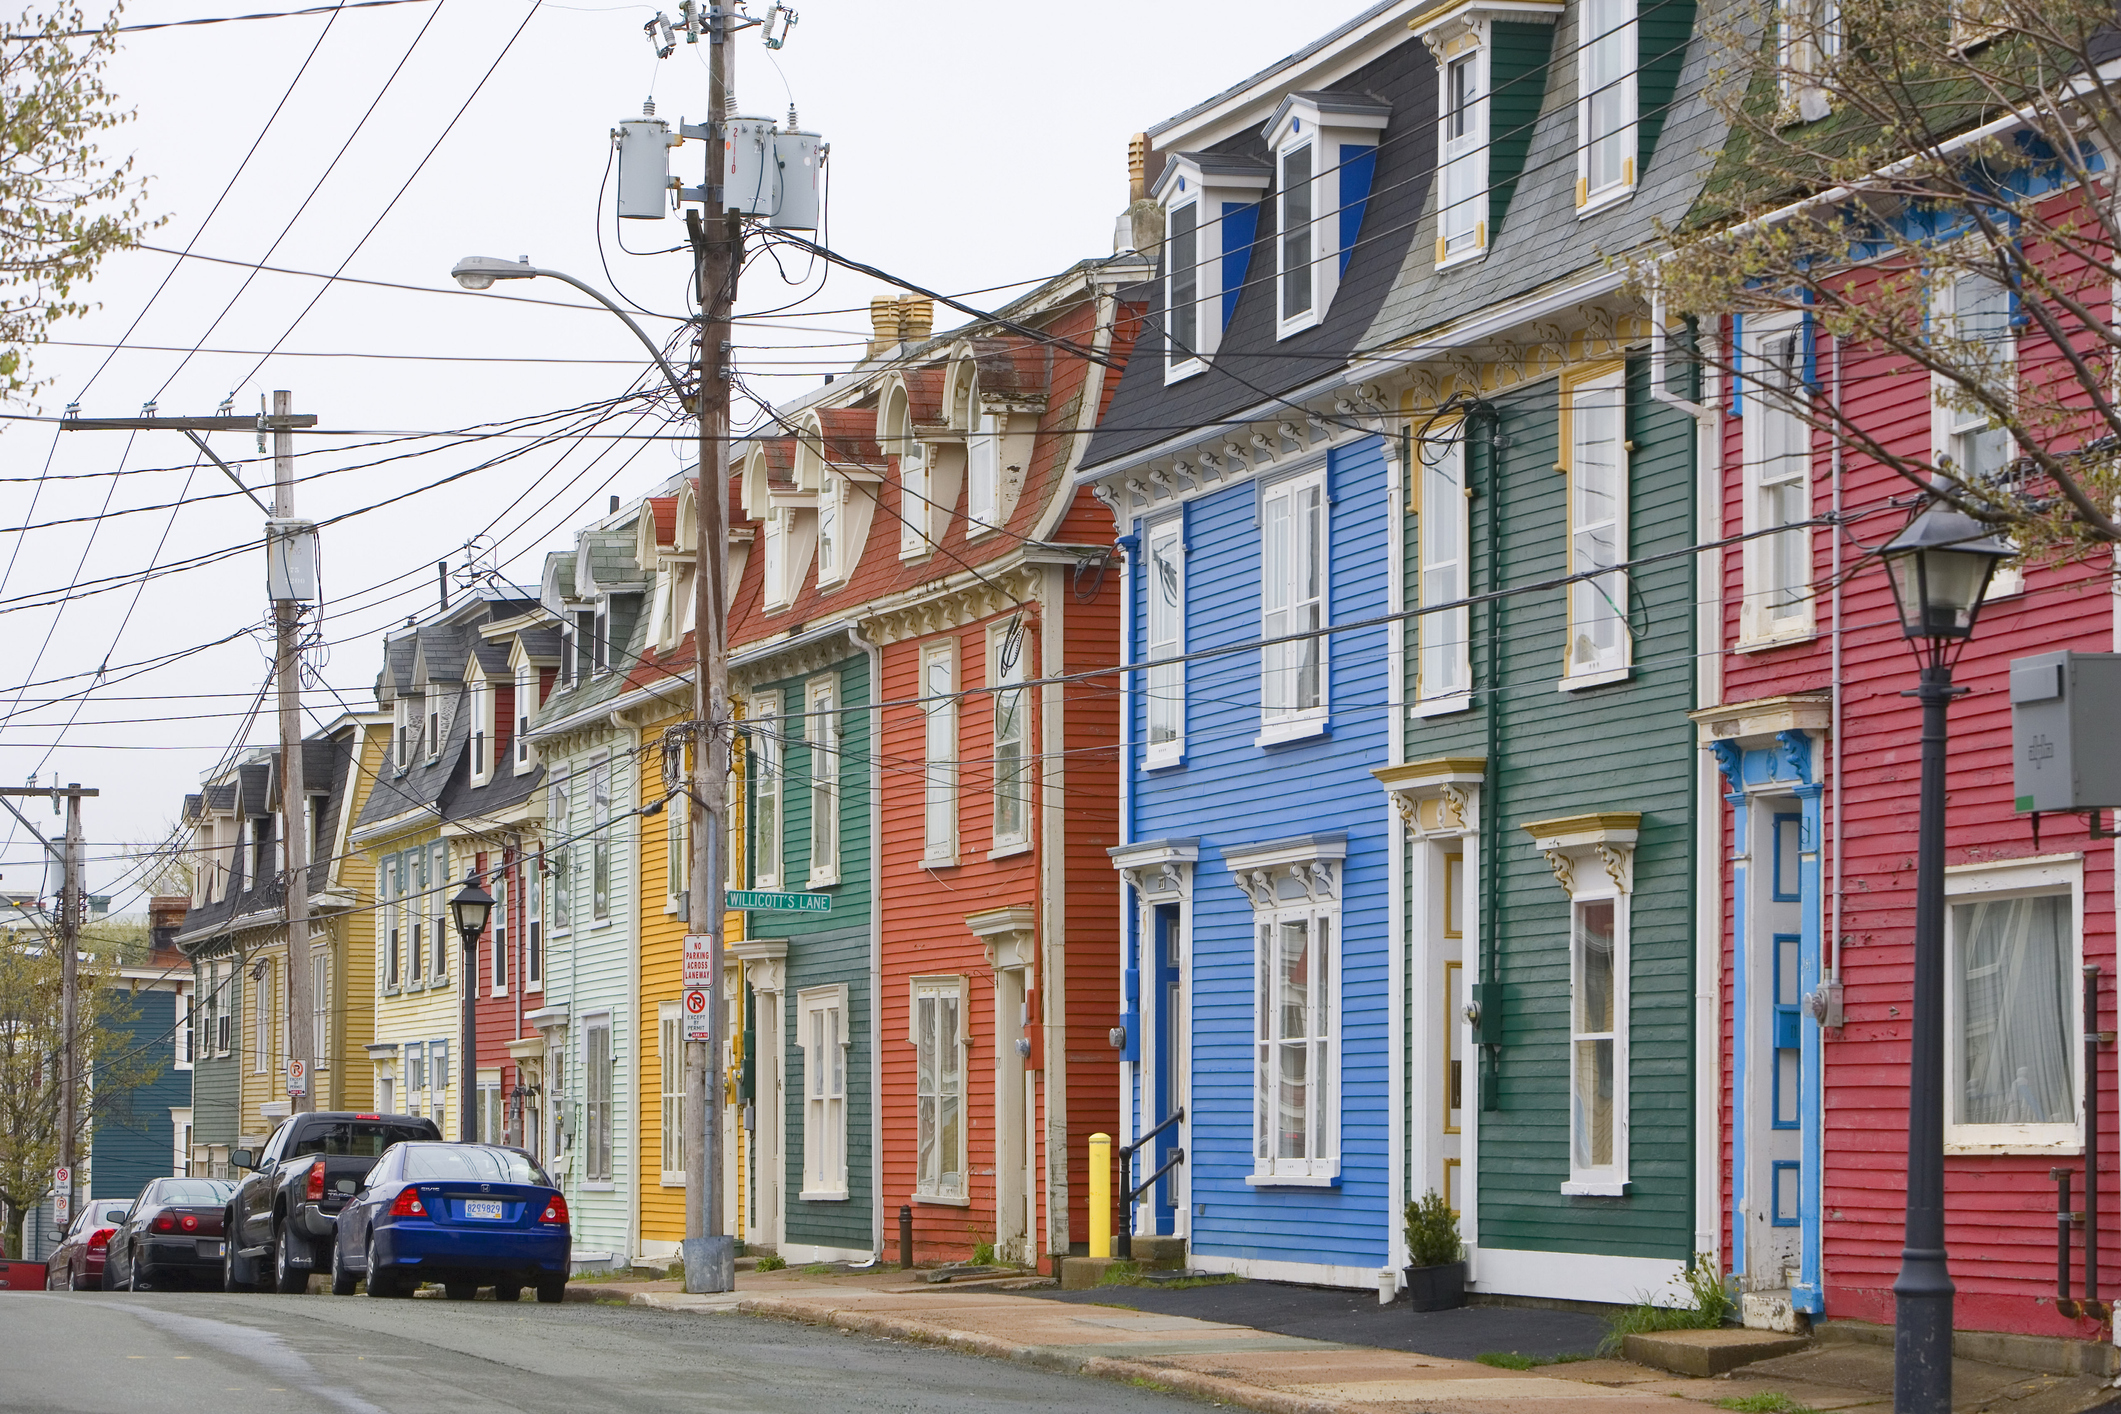 Colourful houses in St. John's